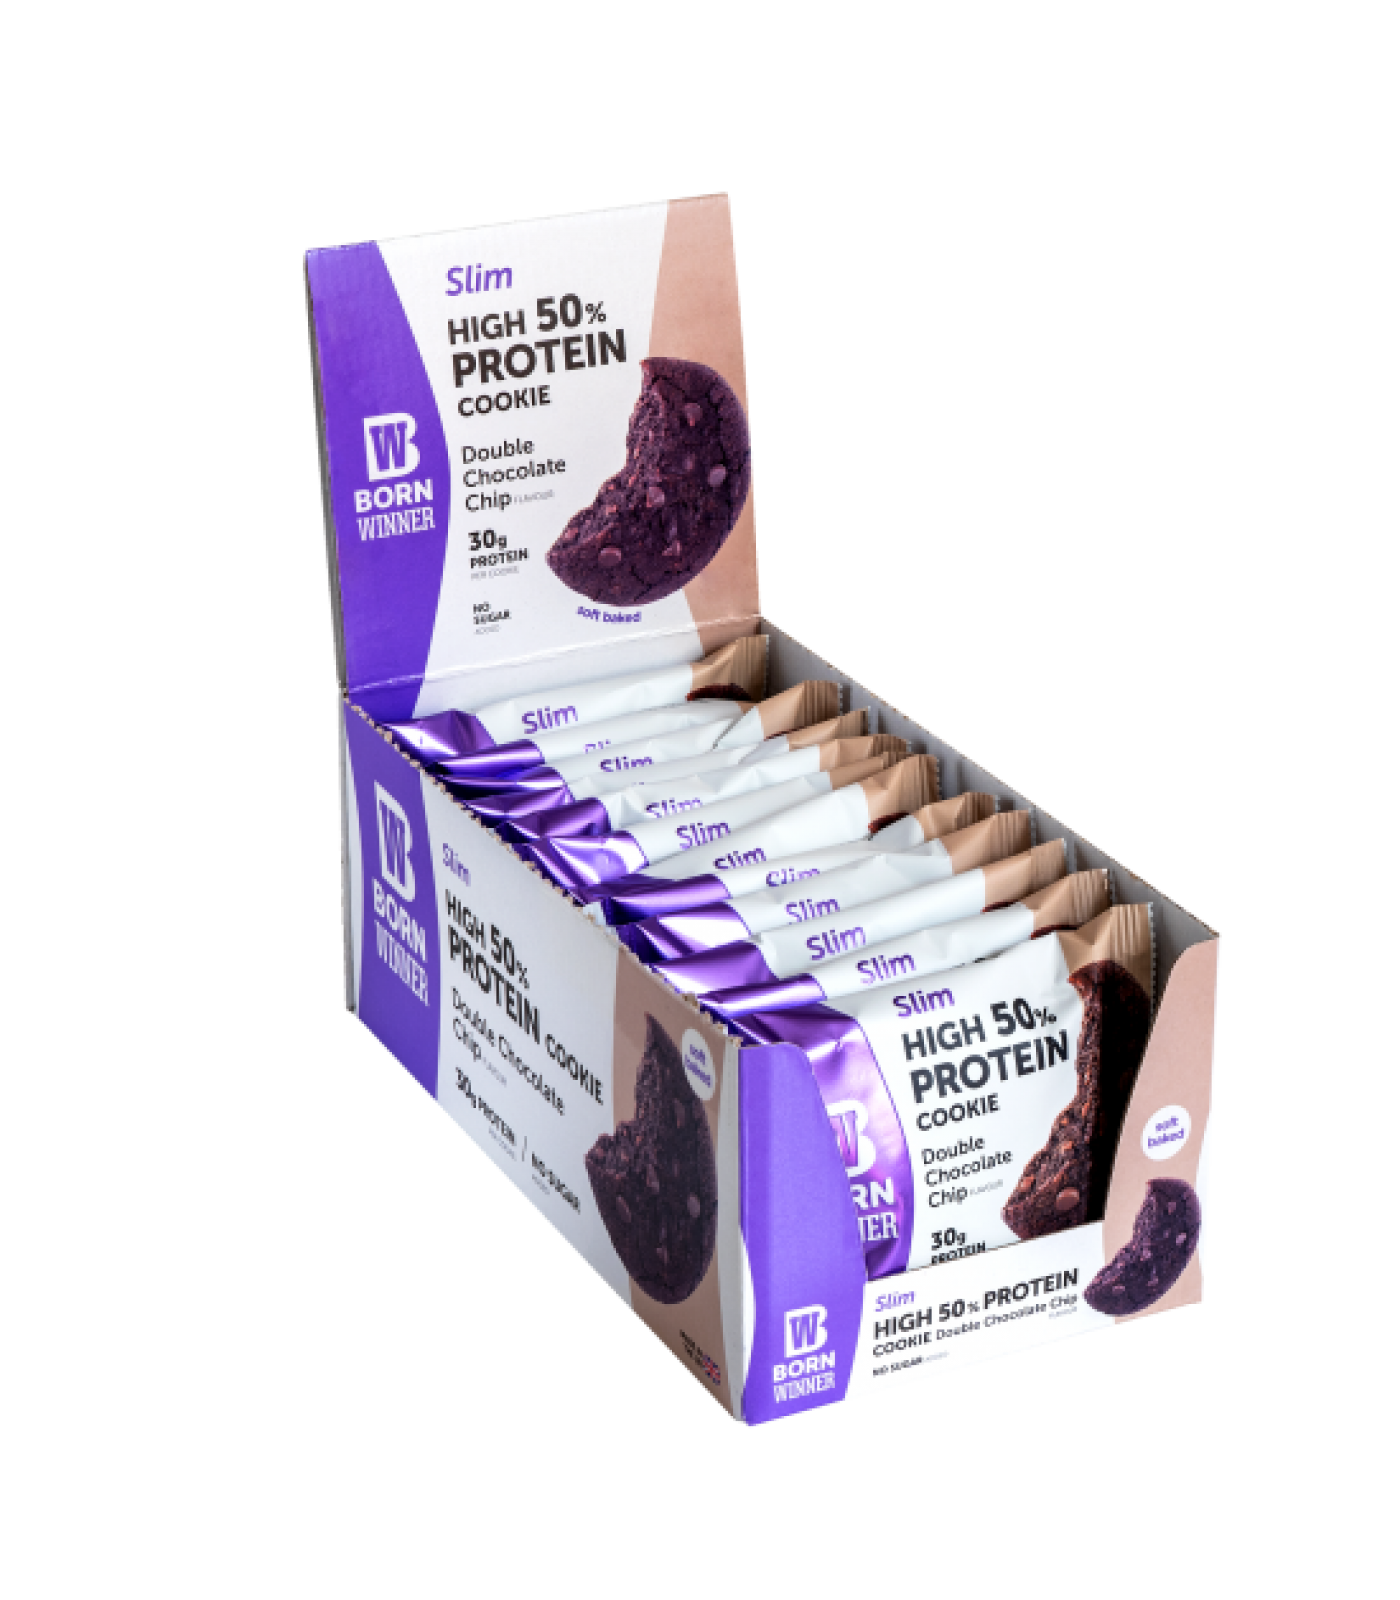 BORN WINNER Slim High 50% Protein Cookie Double Chocolate Chip 12x75 гр